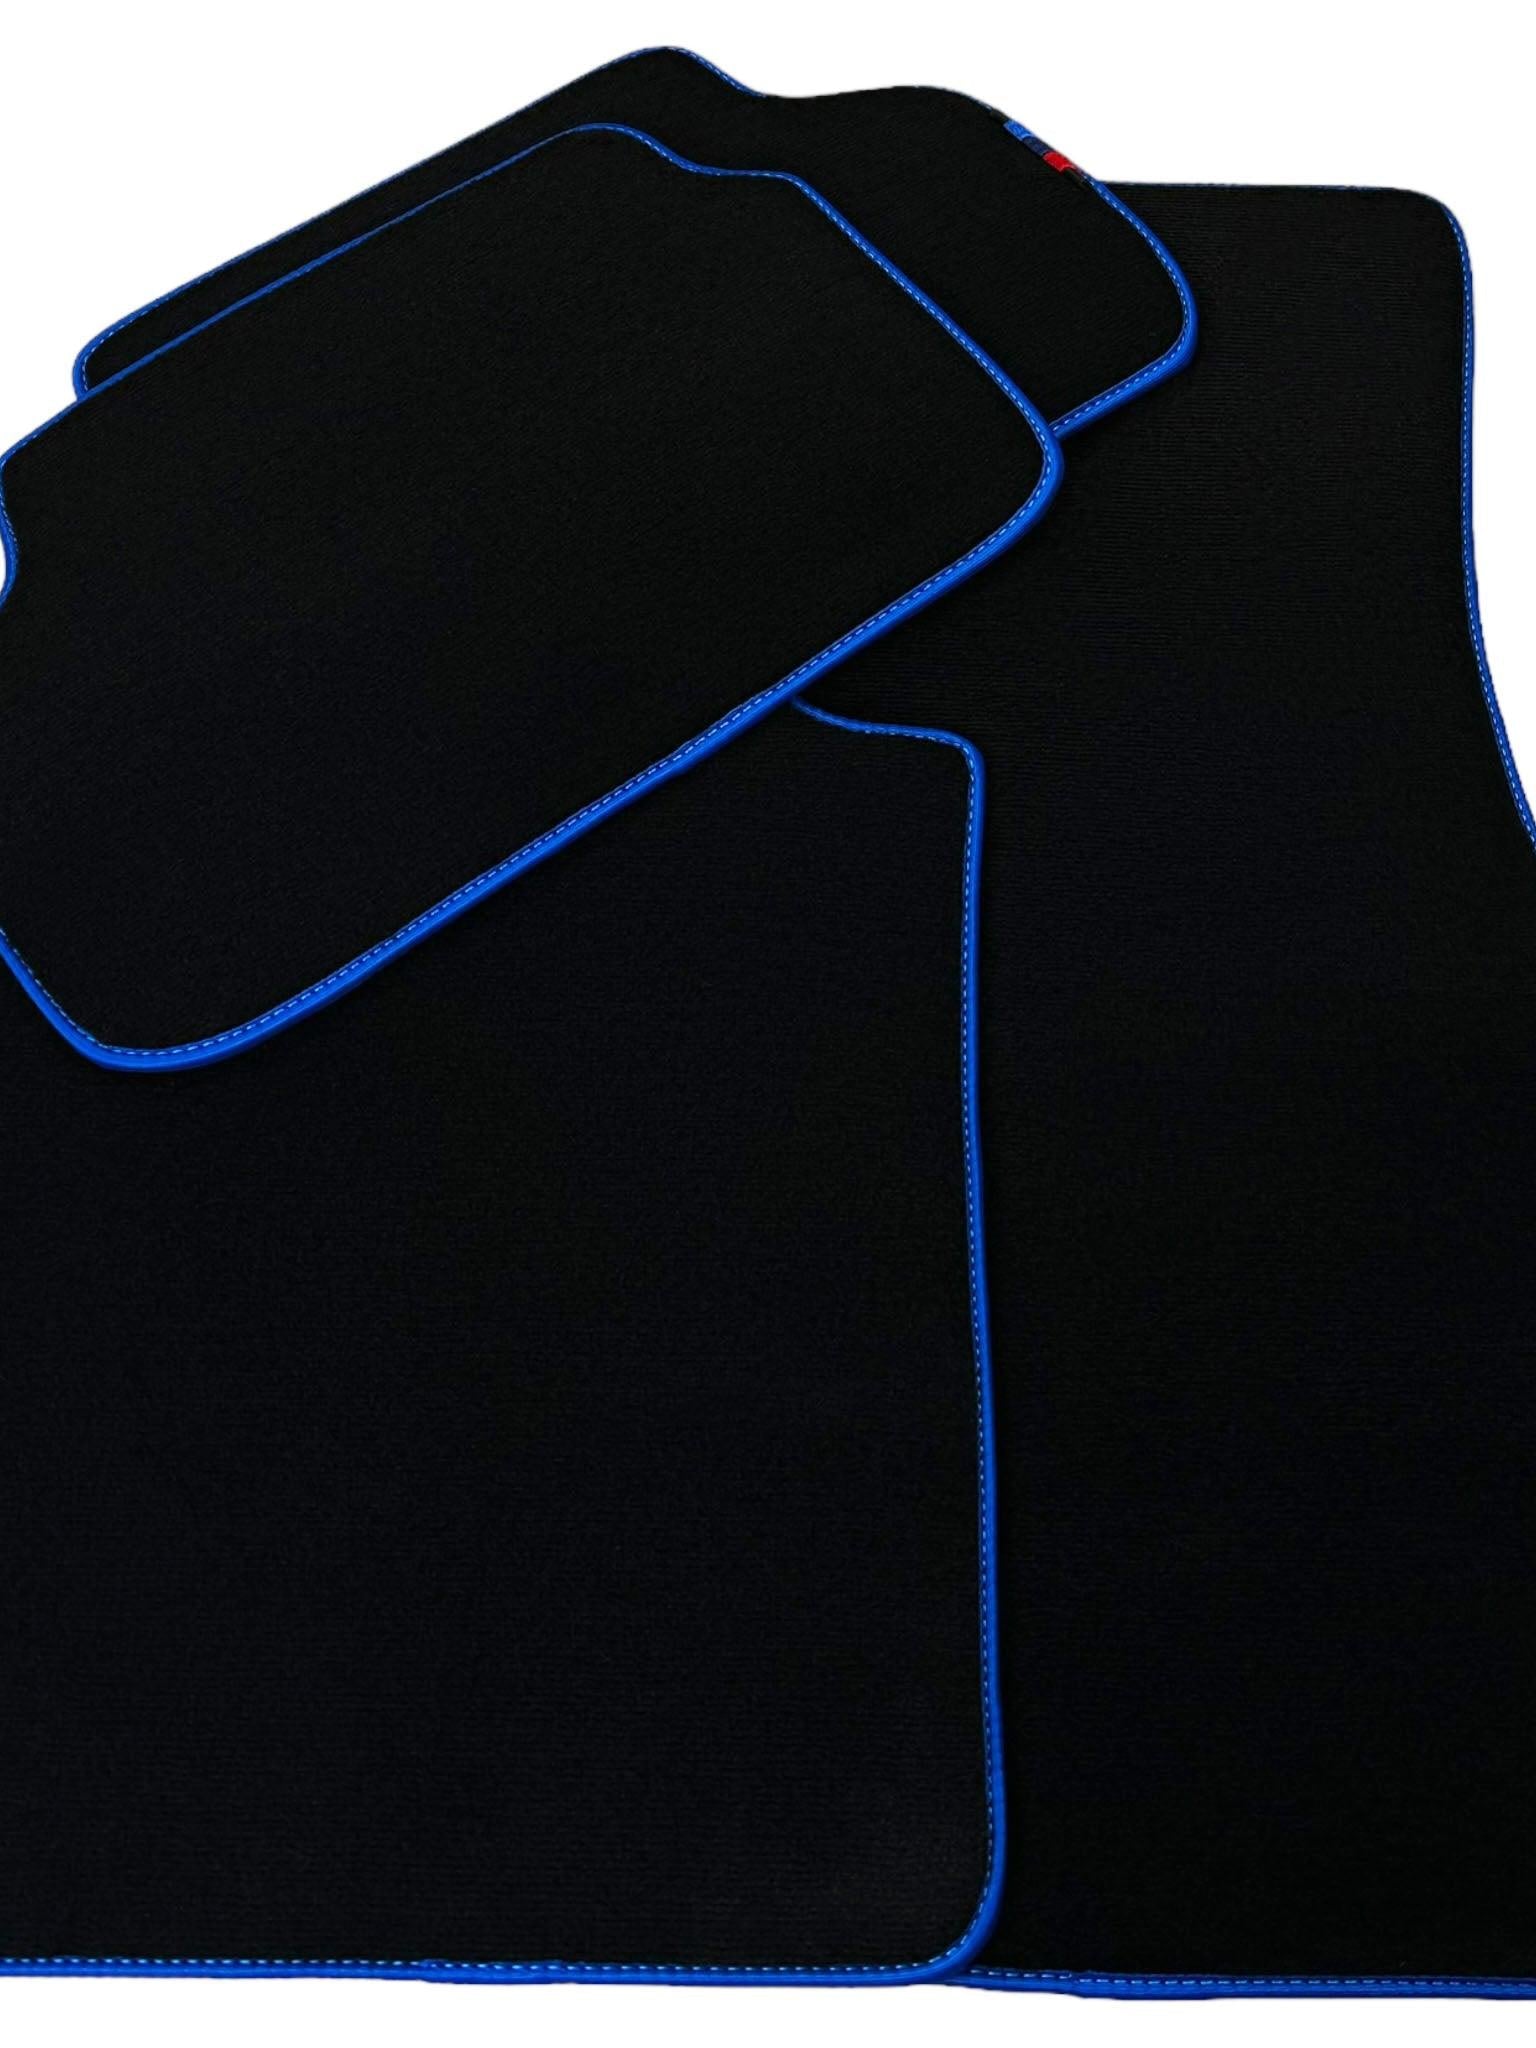 Black Floor Floor Mats For BMW 3 Series G20 | Blue Trim